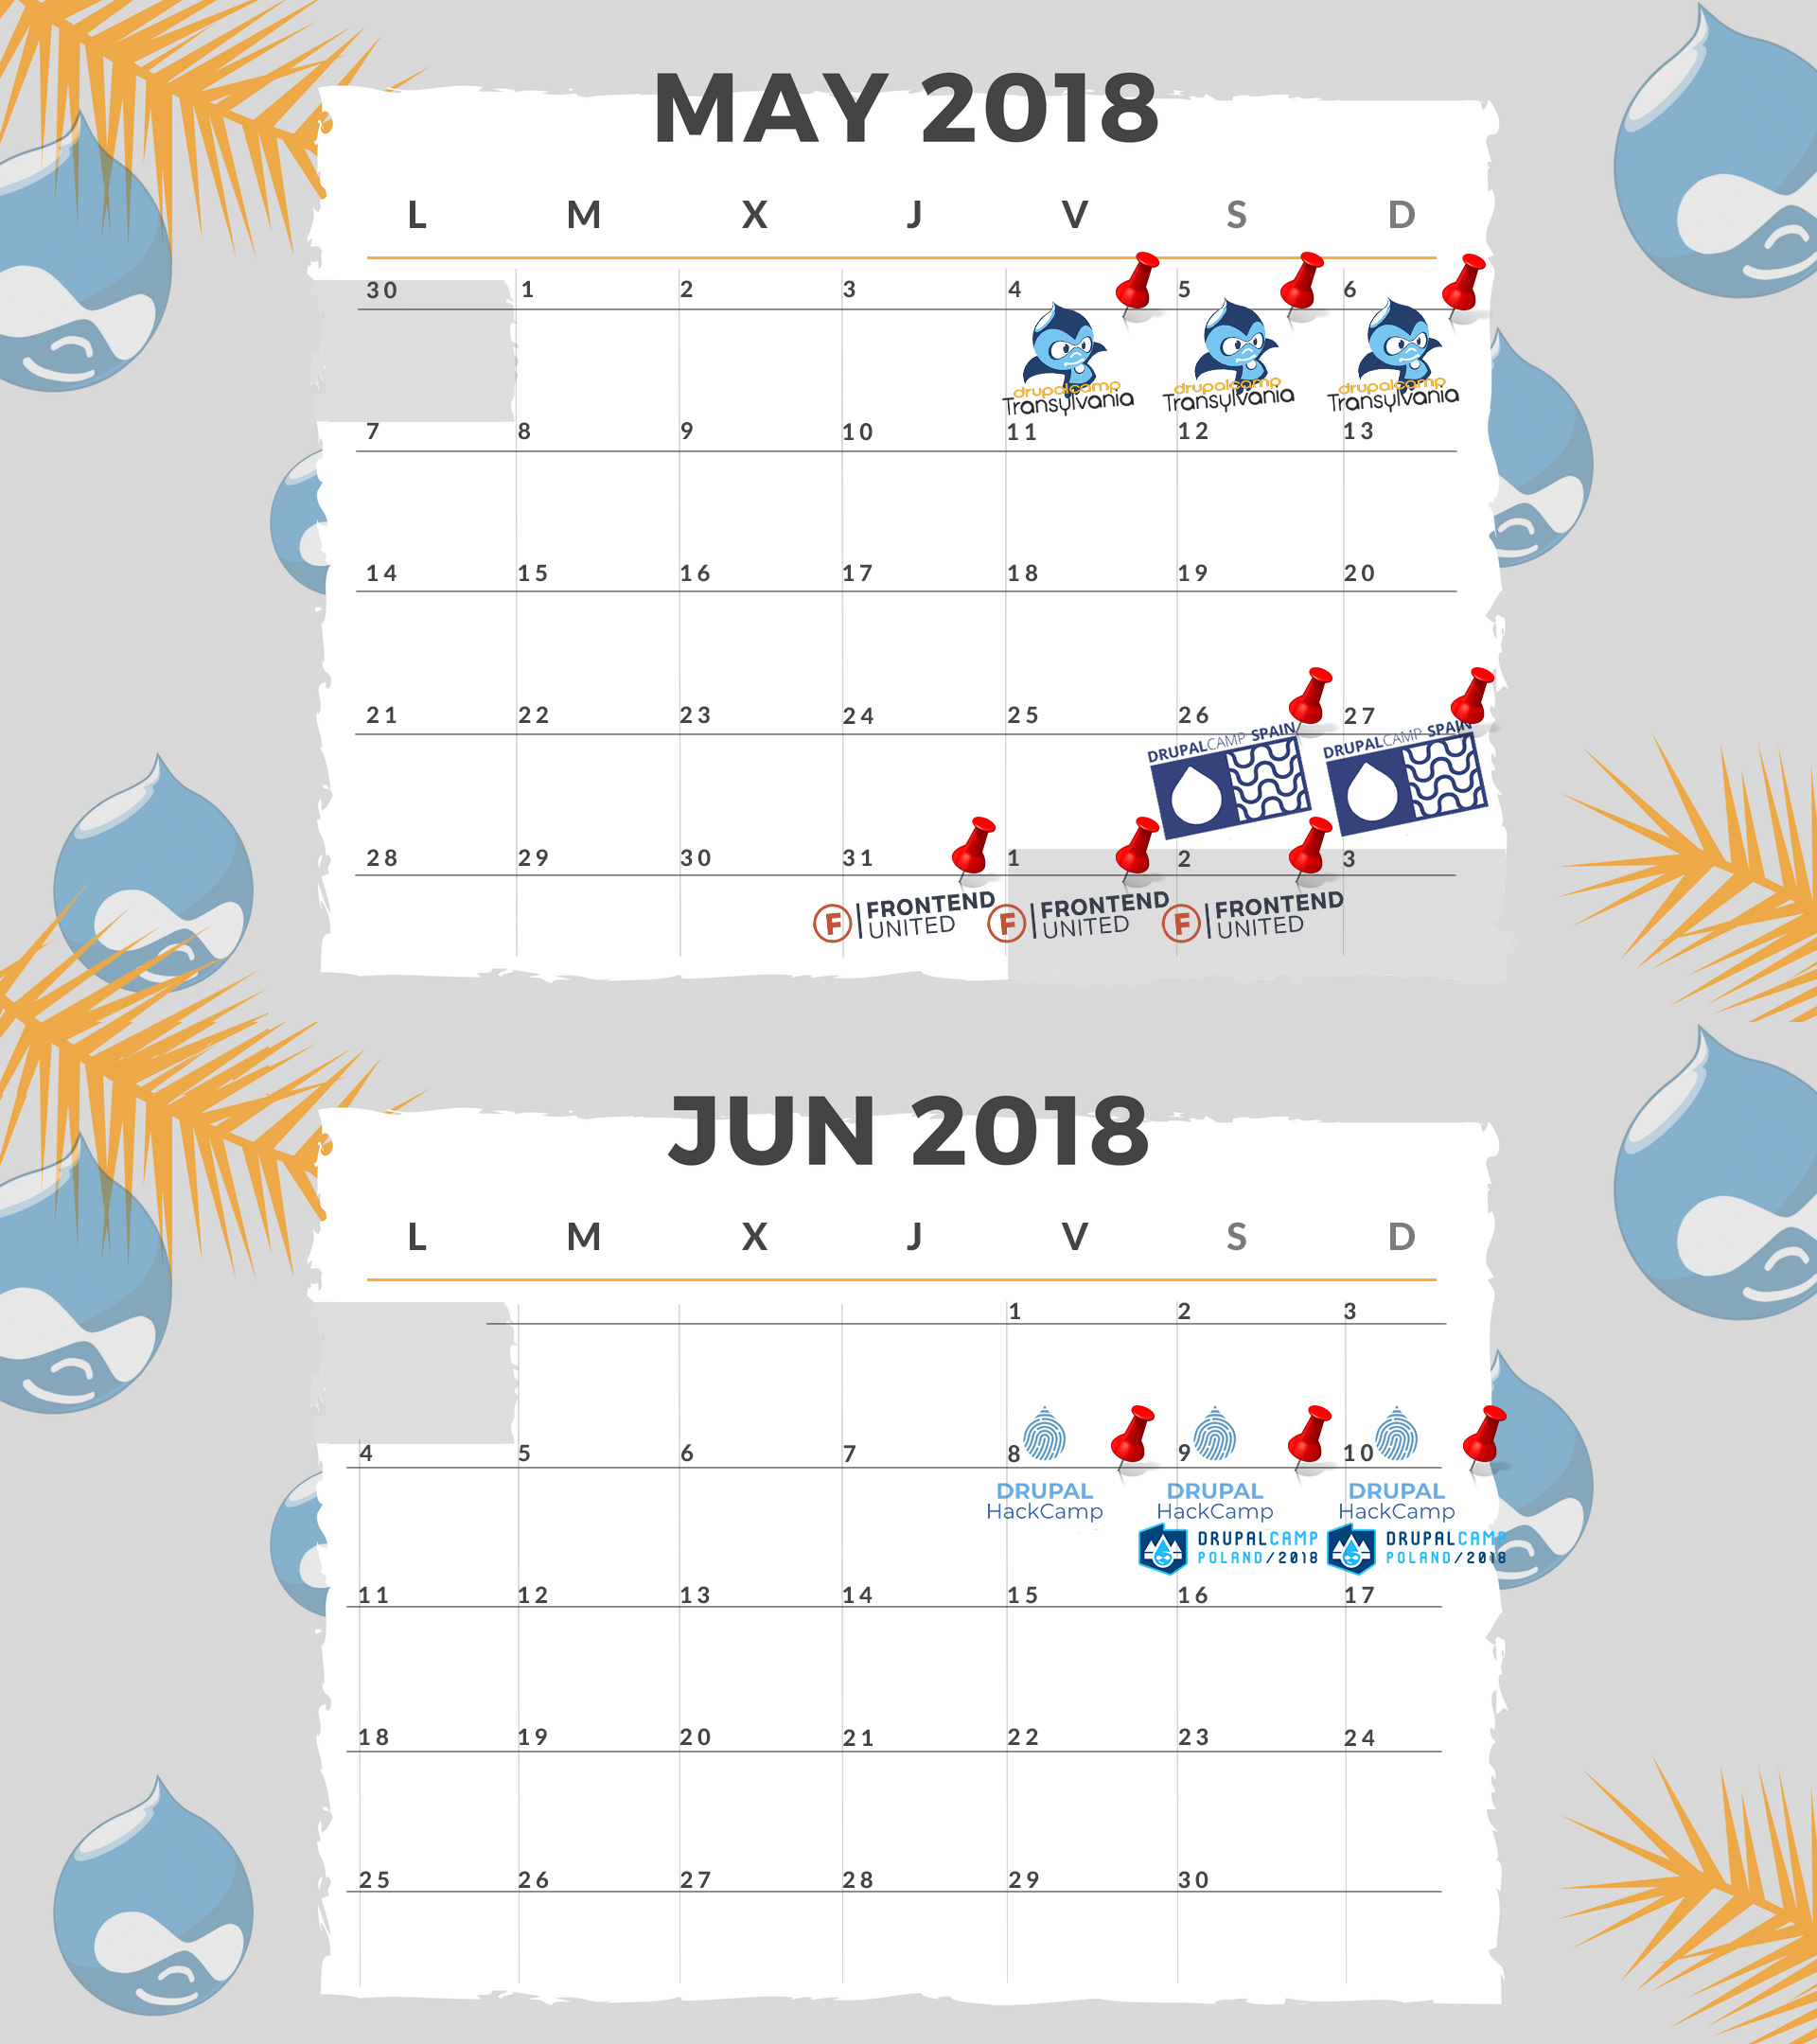 Calendario eventos Drupal